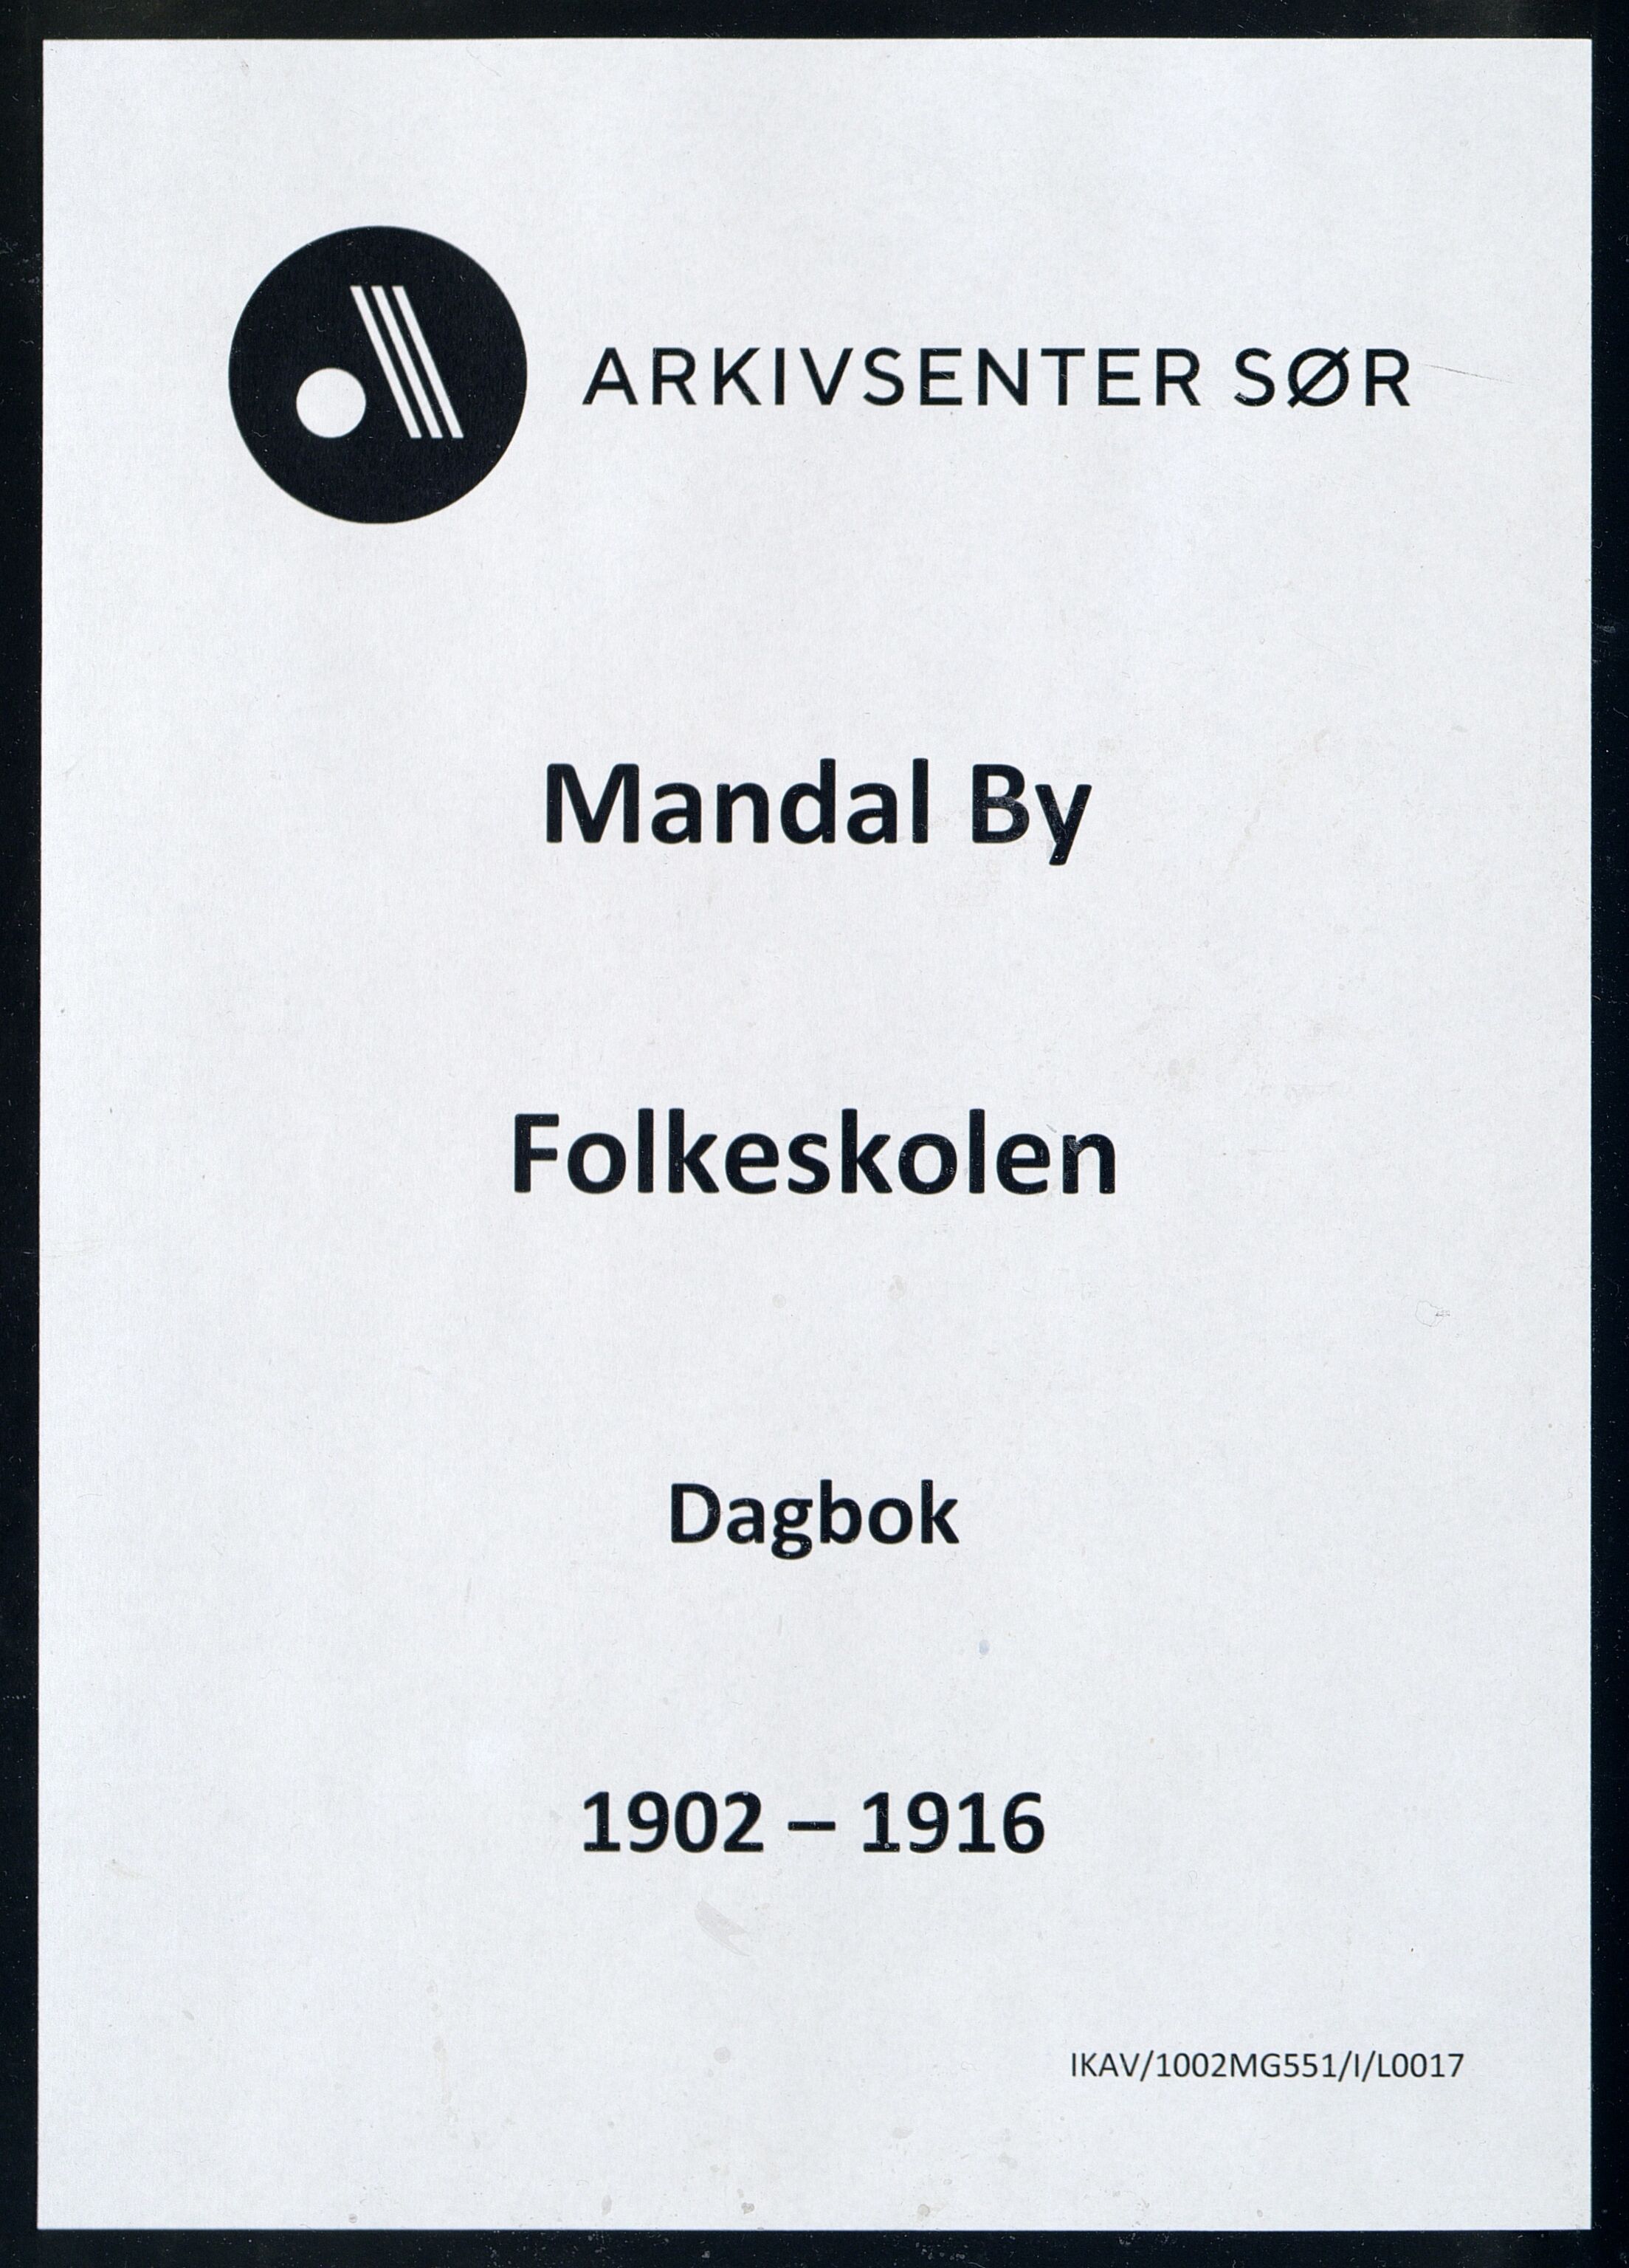 Mandal By - Mandal Allmueskole/Folkeskole/Skole, IKAV/1002MG551/I/L0017: Dagbok, 1902-1916